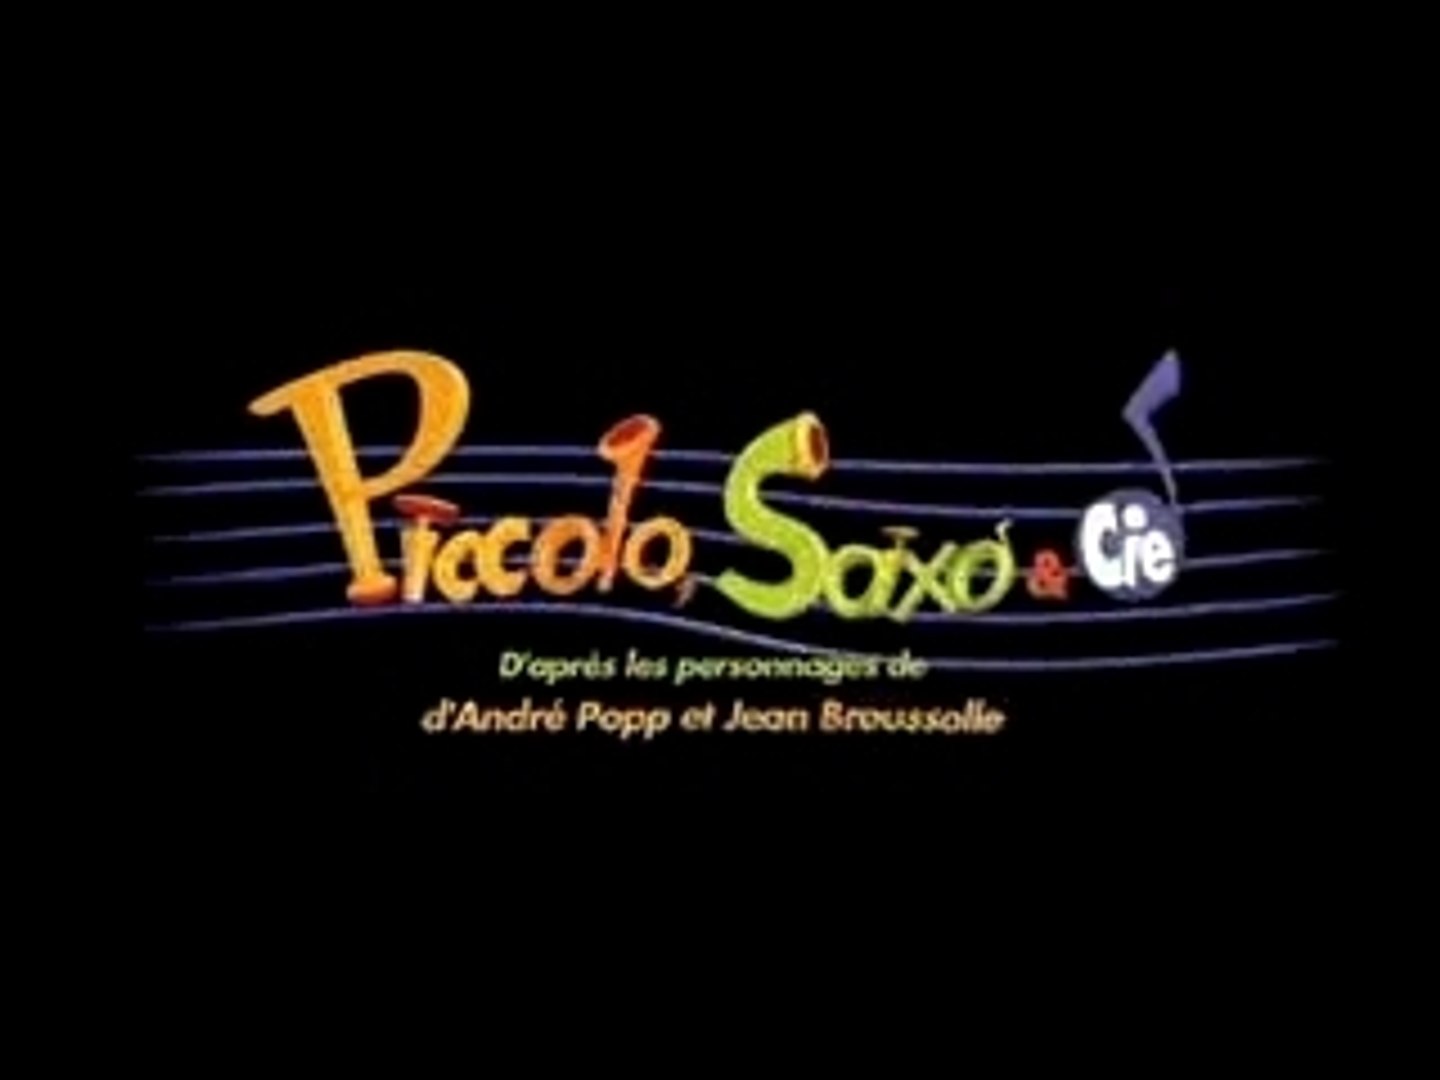 Piccolo, Saxo et Cie - Vidéo Dailymotion